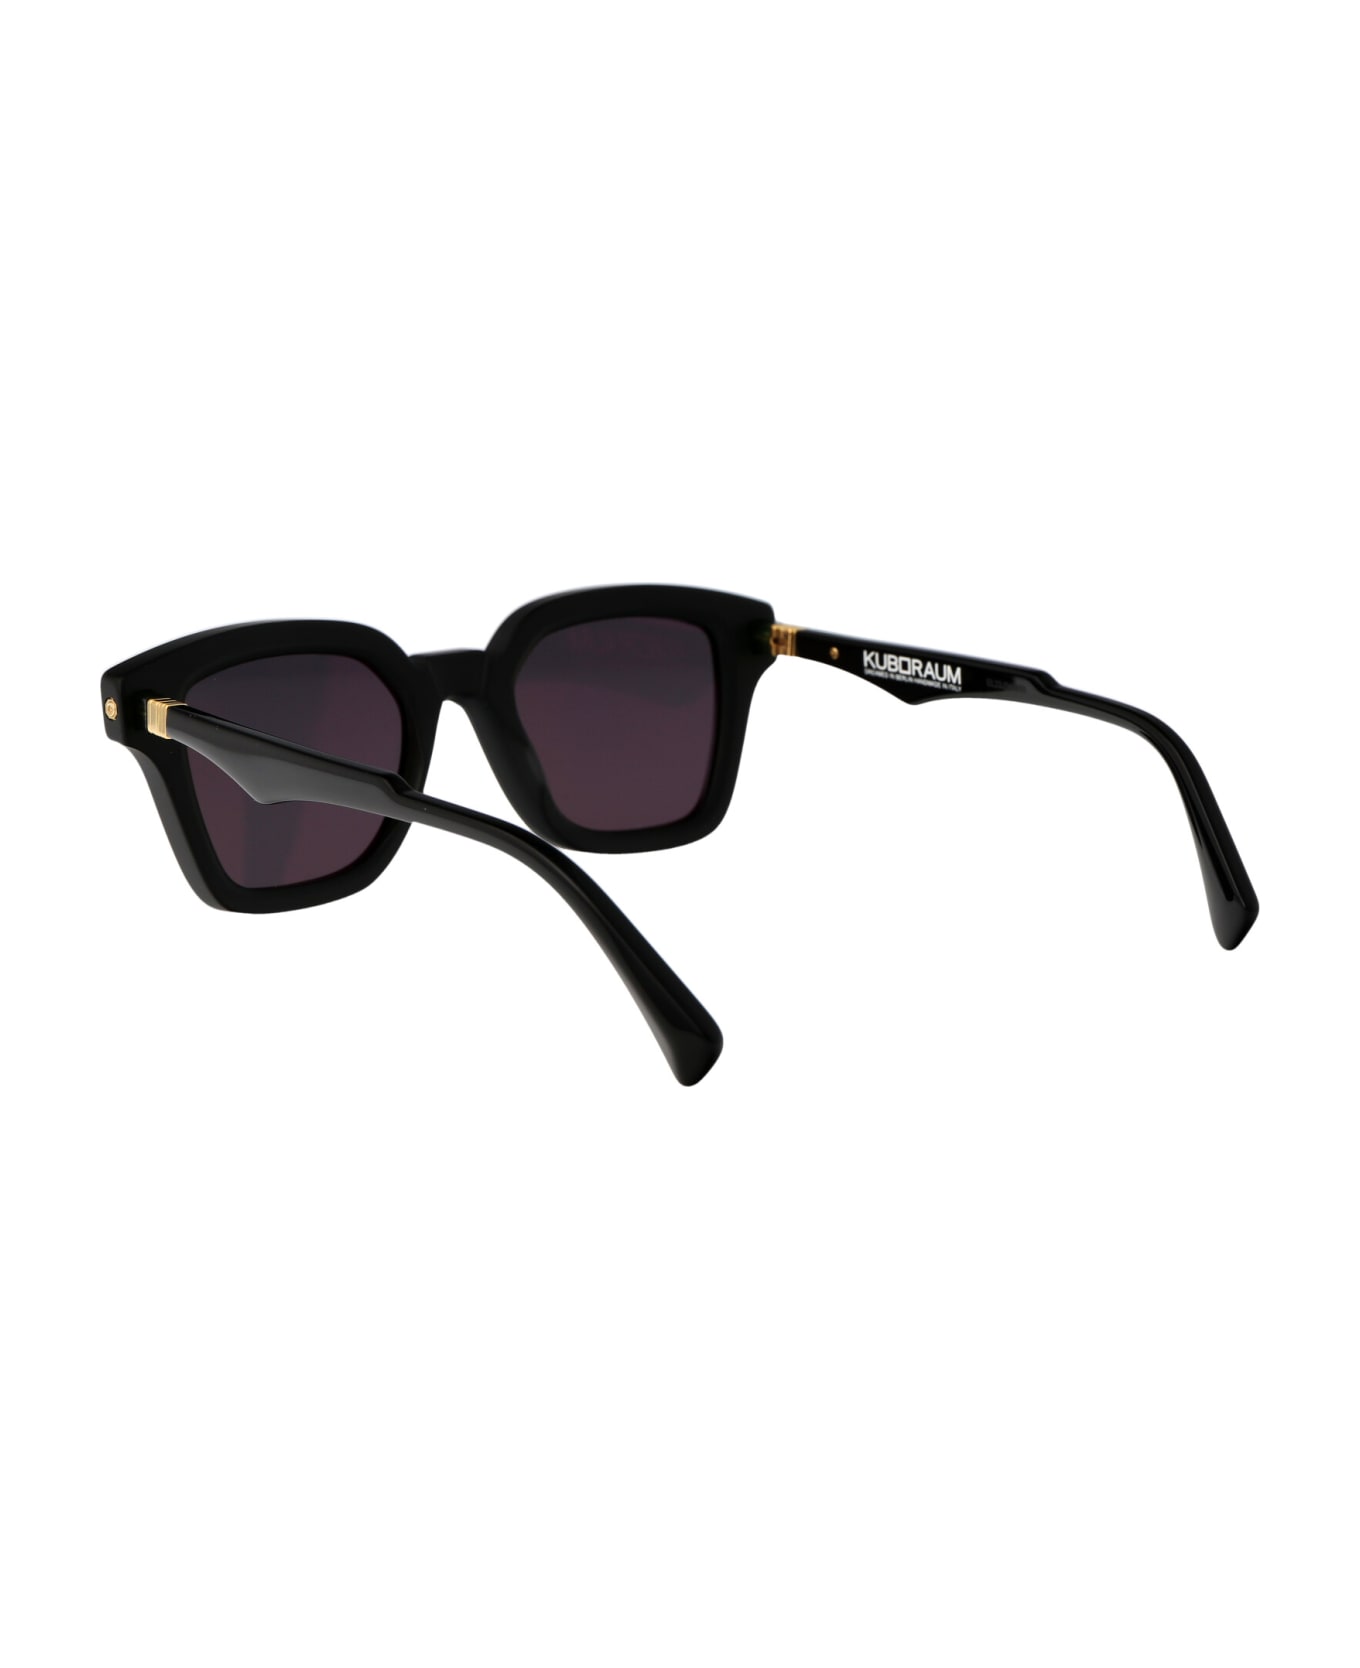 Kuboraum Maske Q3 Sunglasses - BM grey1*